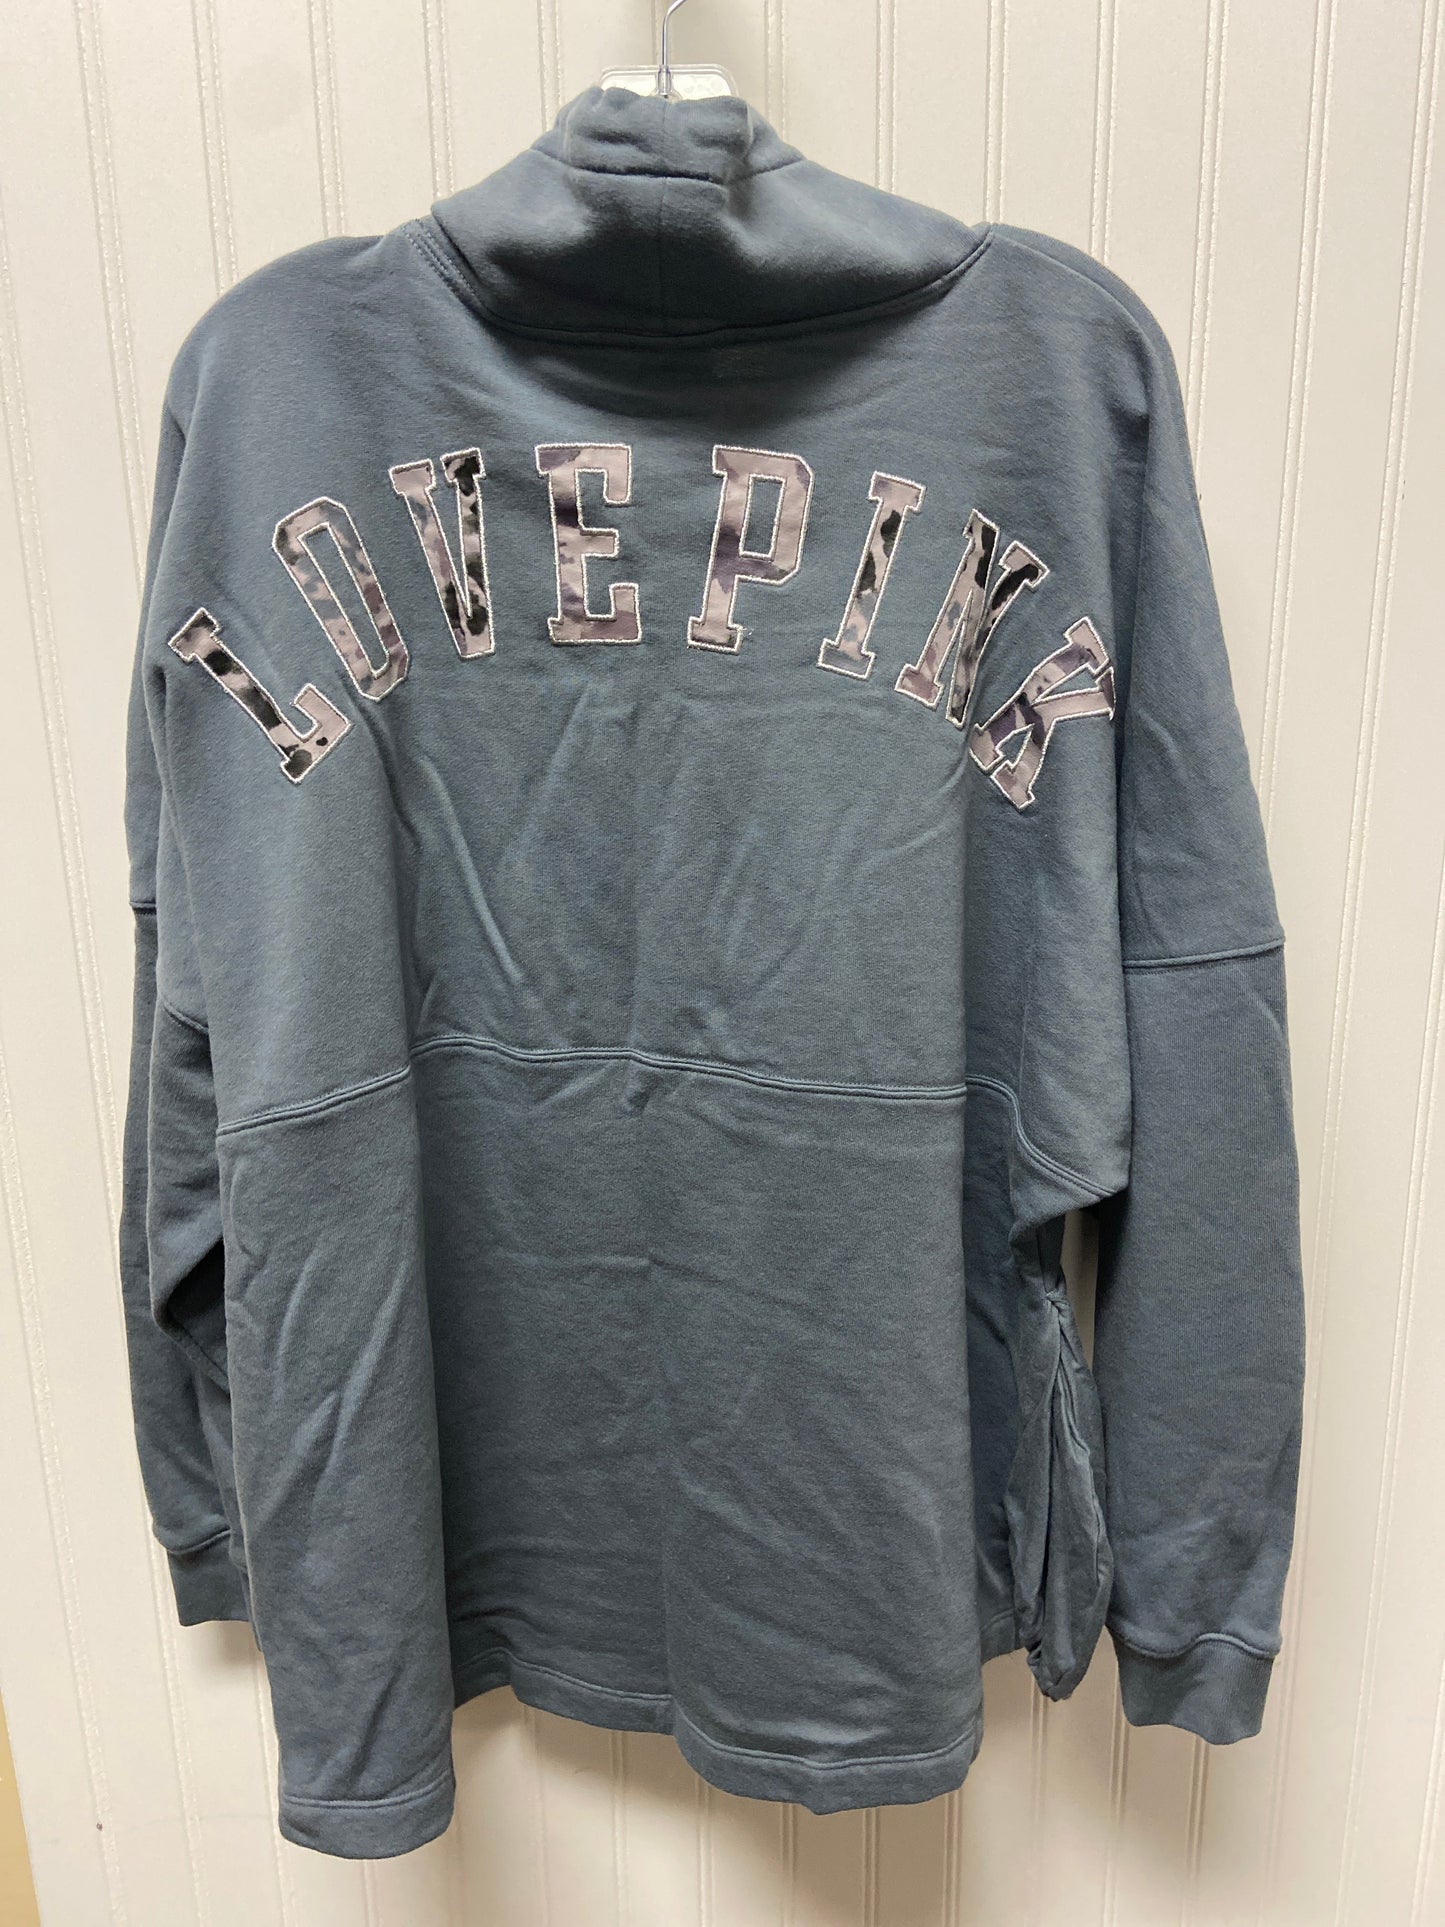 Grey Athletic Sweatshirt Collar Pink, Size 1x